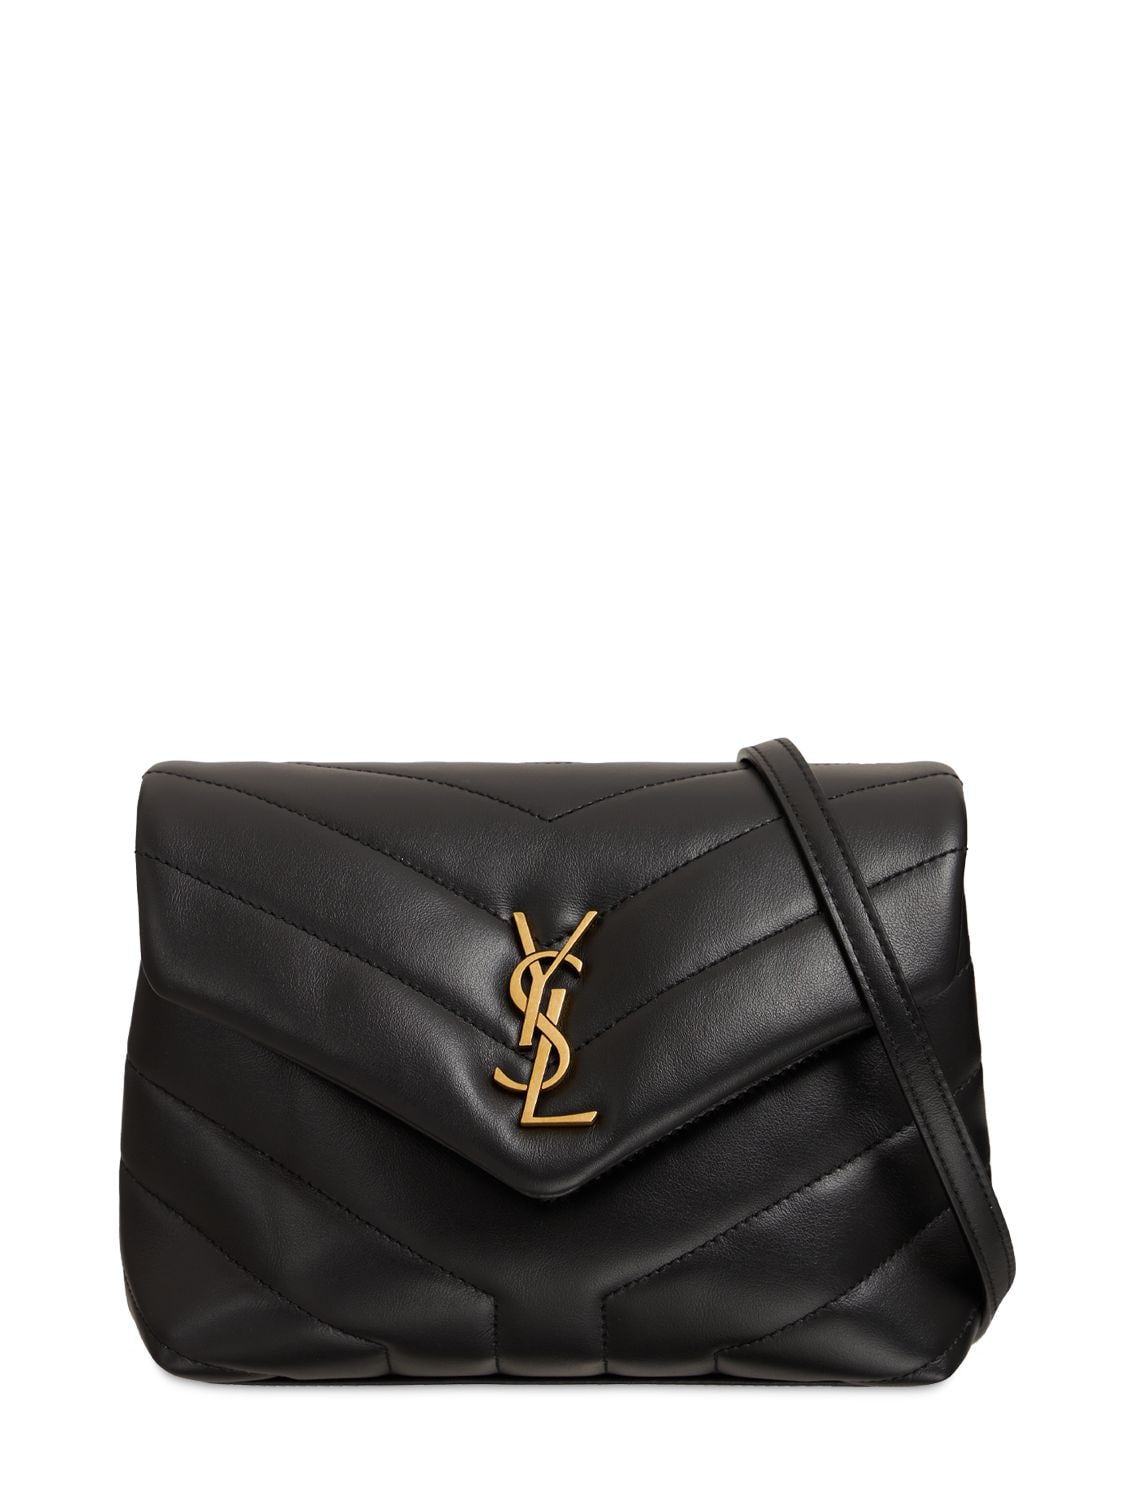 Saint Laurent Toy Loulou Leather Shoulder Bag In Black | ModeSens